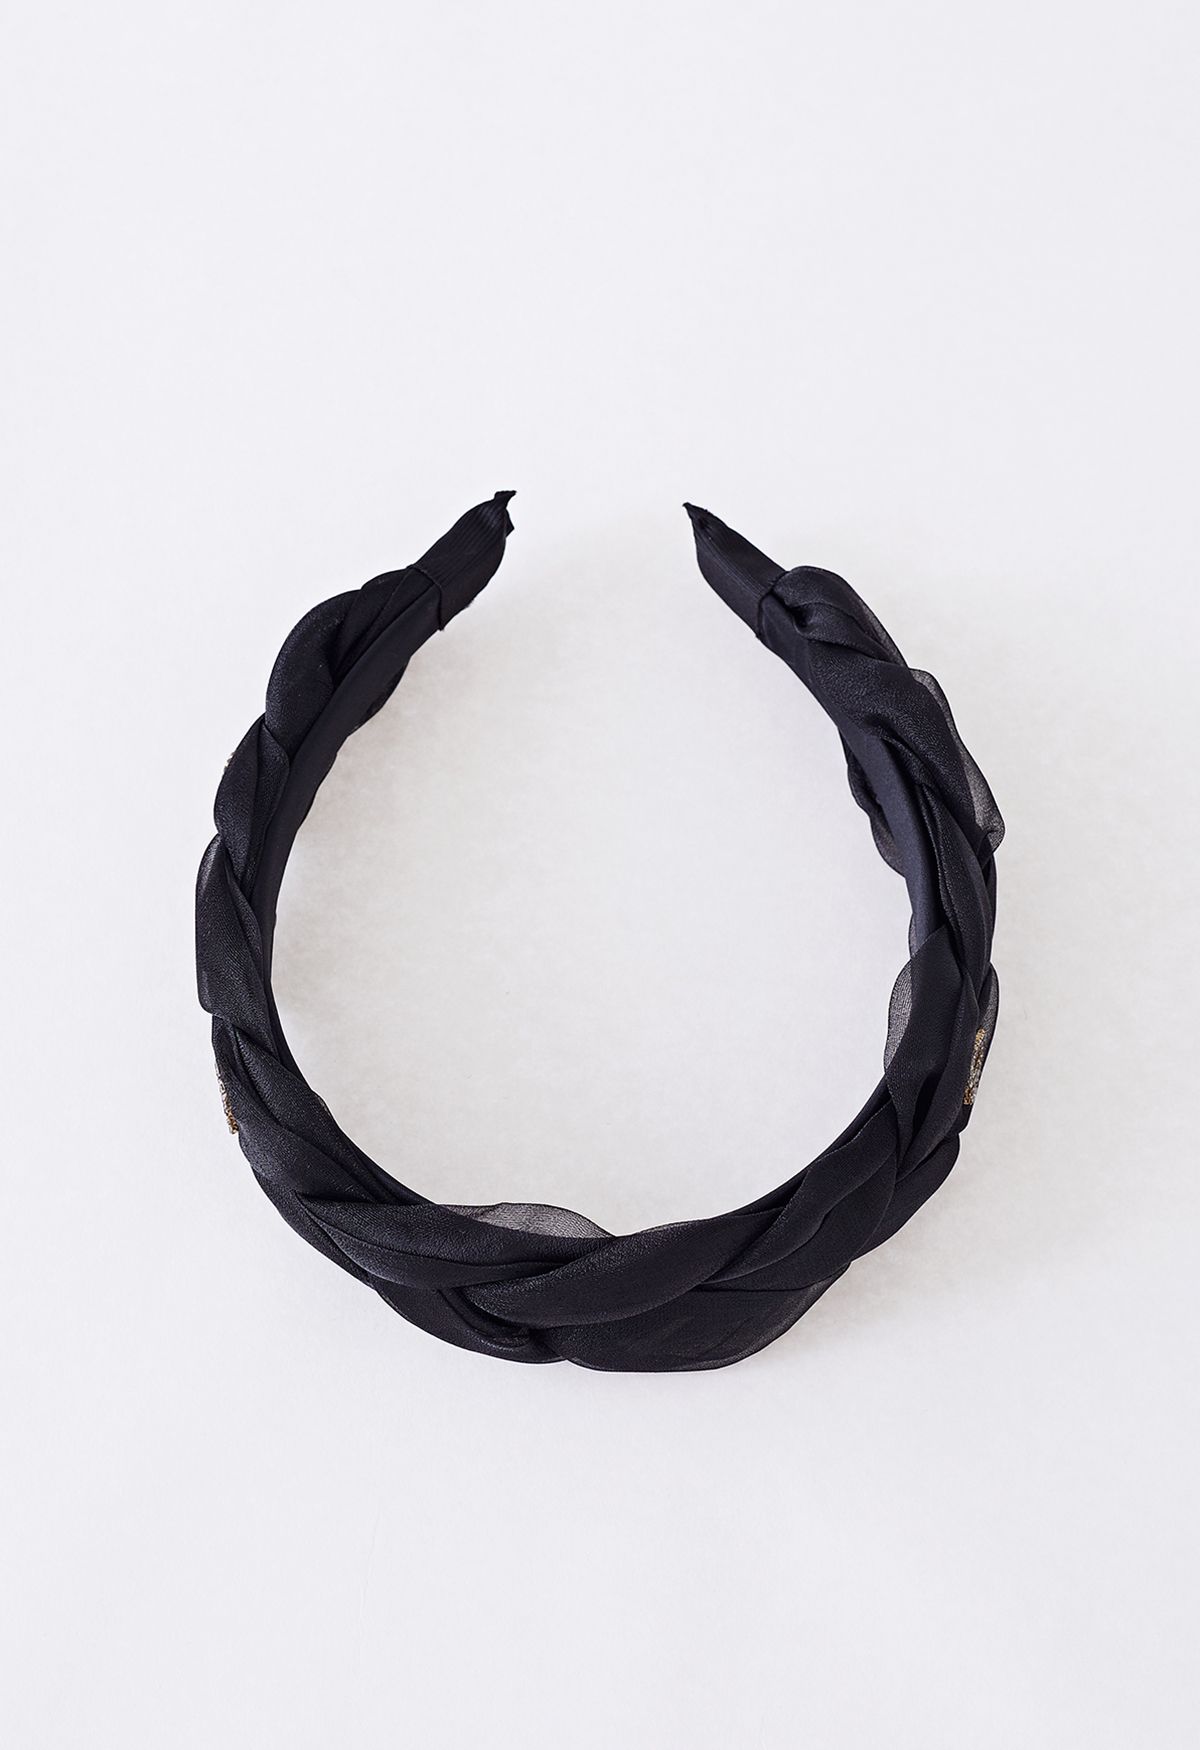 Crystal Heart Braided Organza Headband in Black